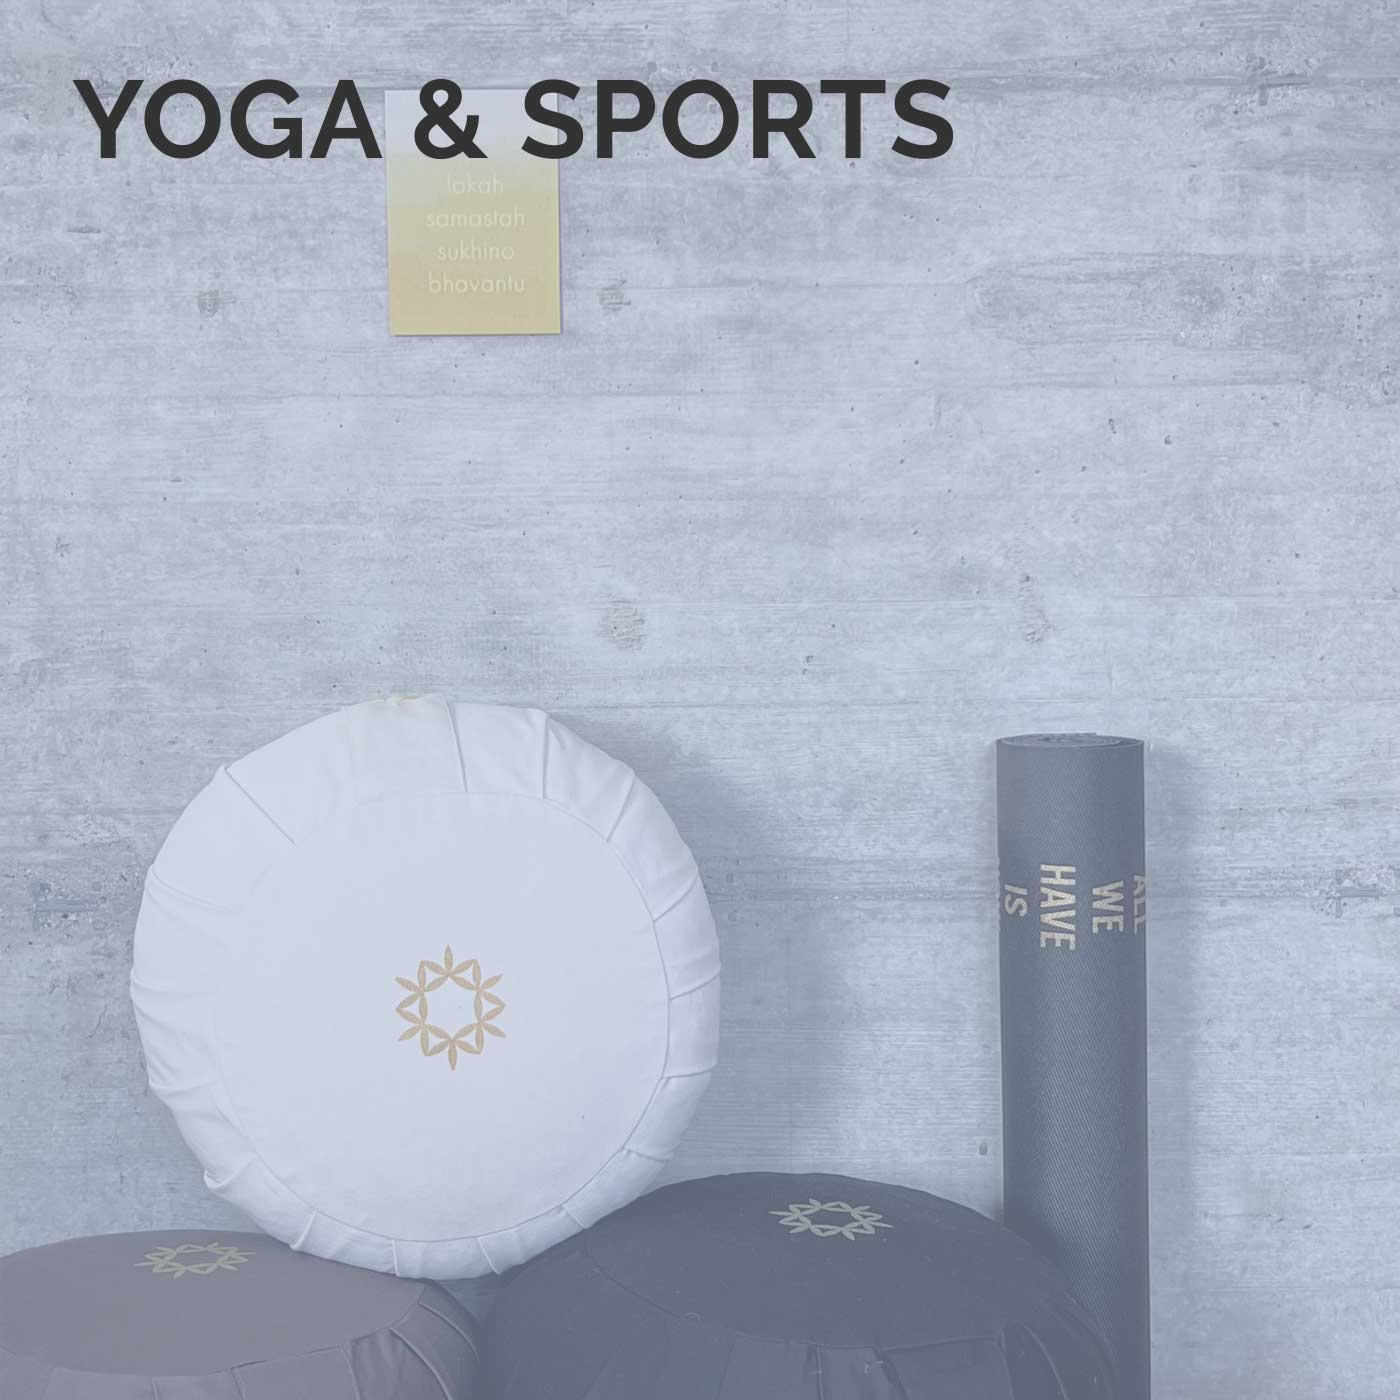 Yoga & Sports